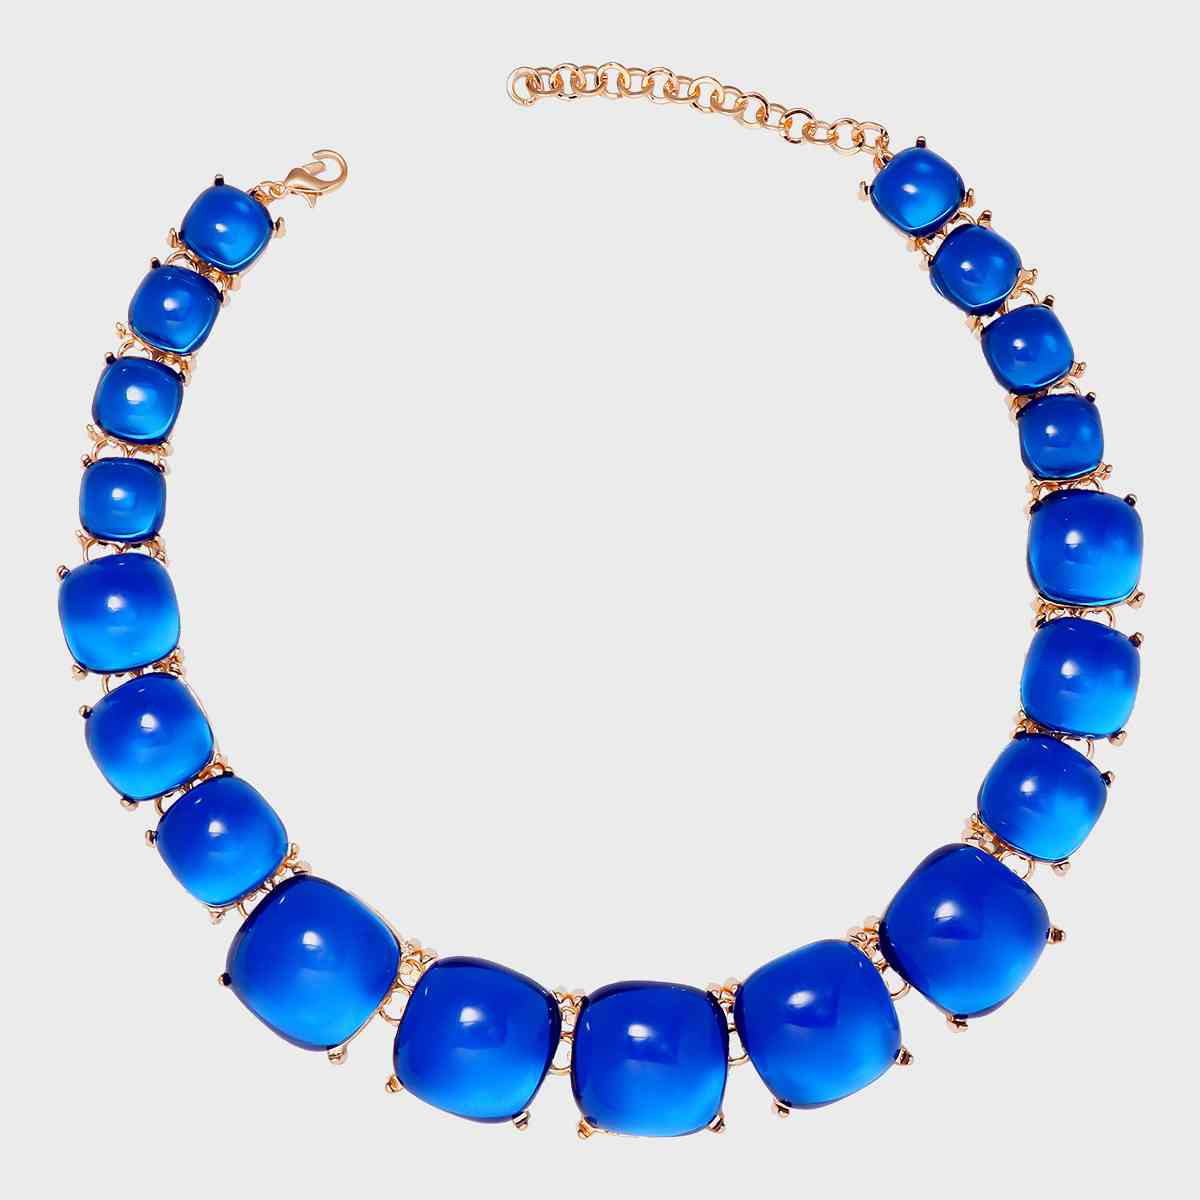 Alloy & Rhinestone Necklace BLUE ZONE PLANET